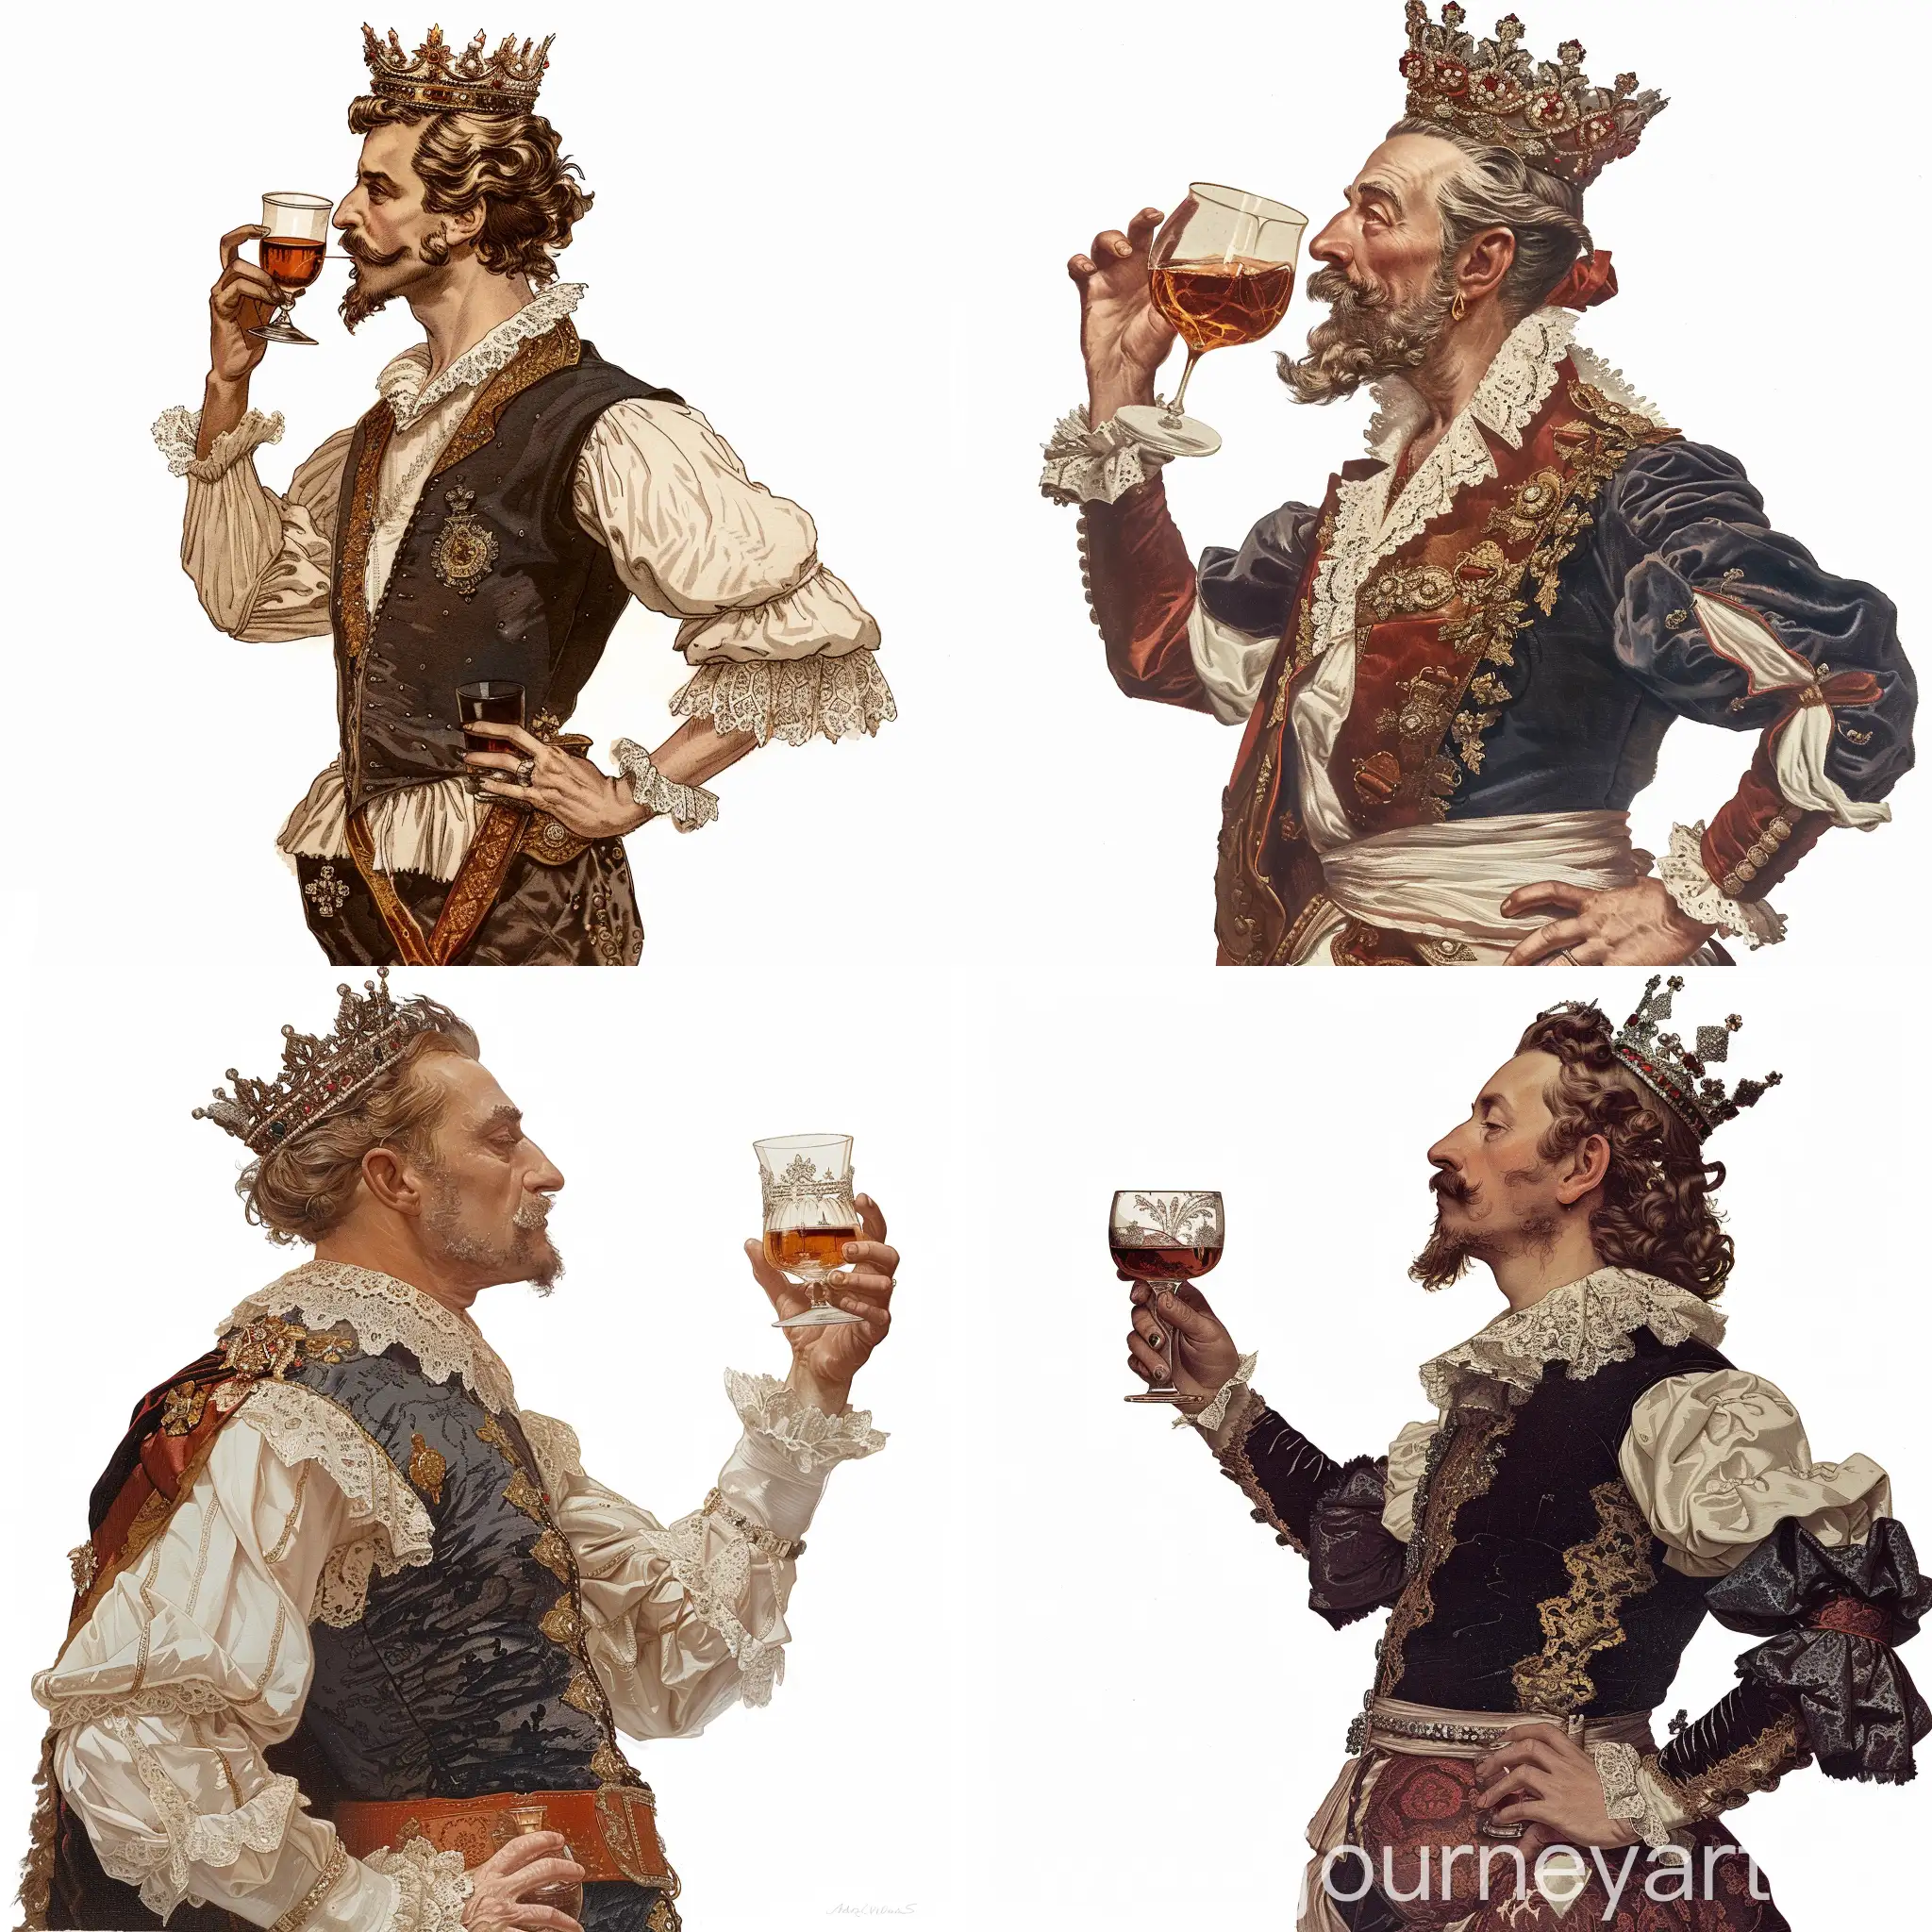 Regal-Portrait-of-an-Ancient-Spanish-King-Enjoying-Cognac-in-Opulent-Attire